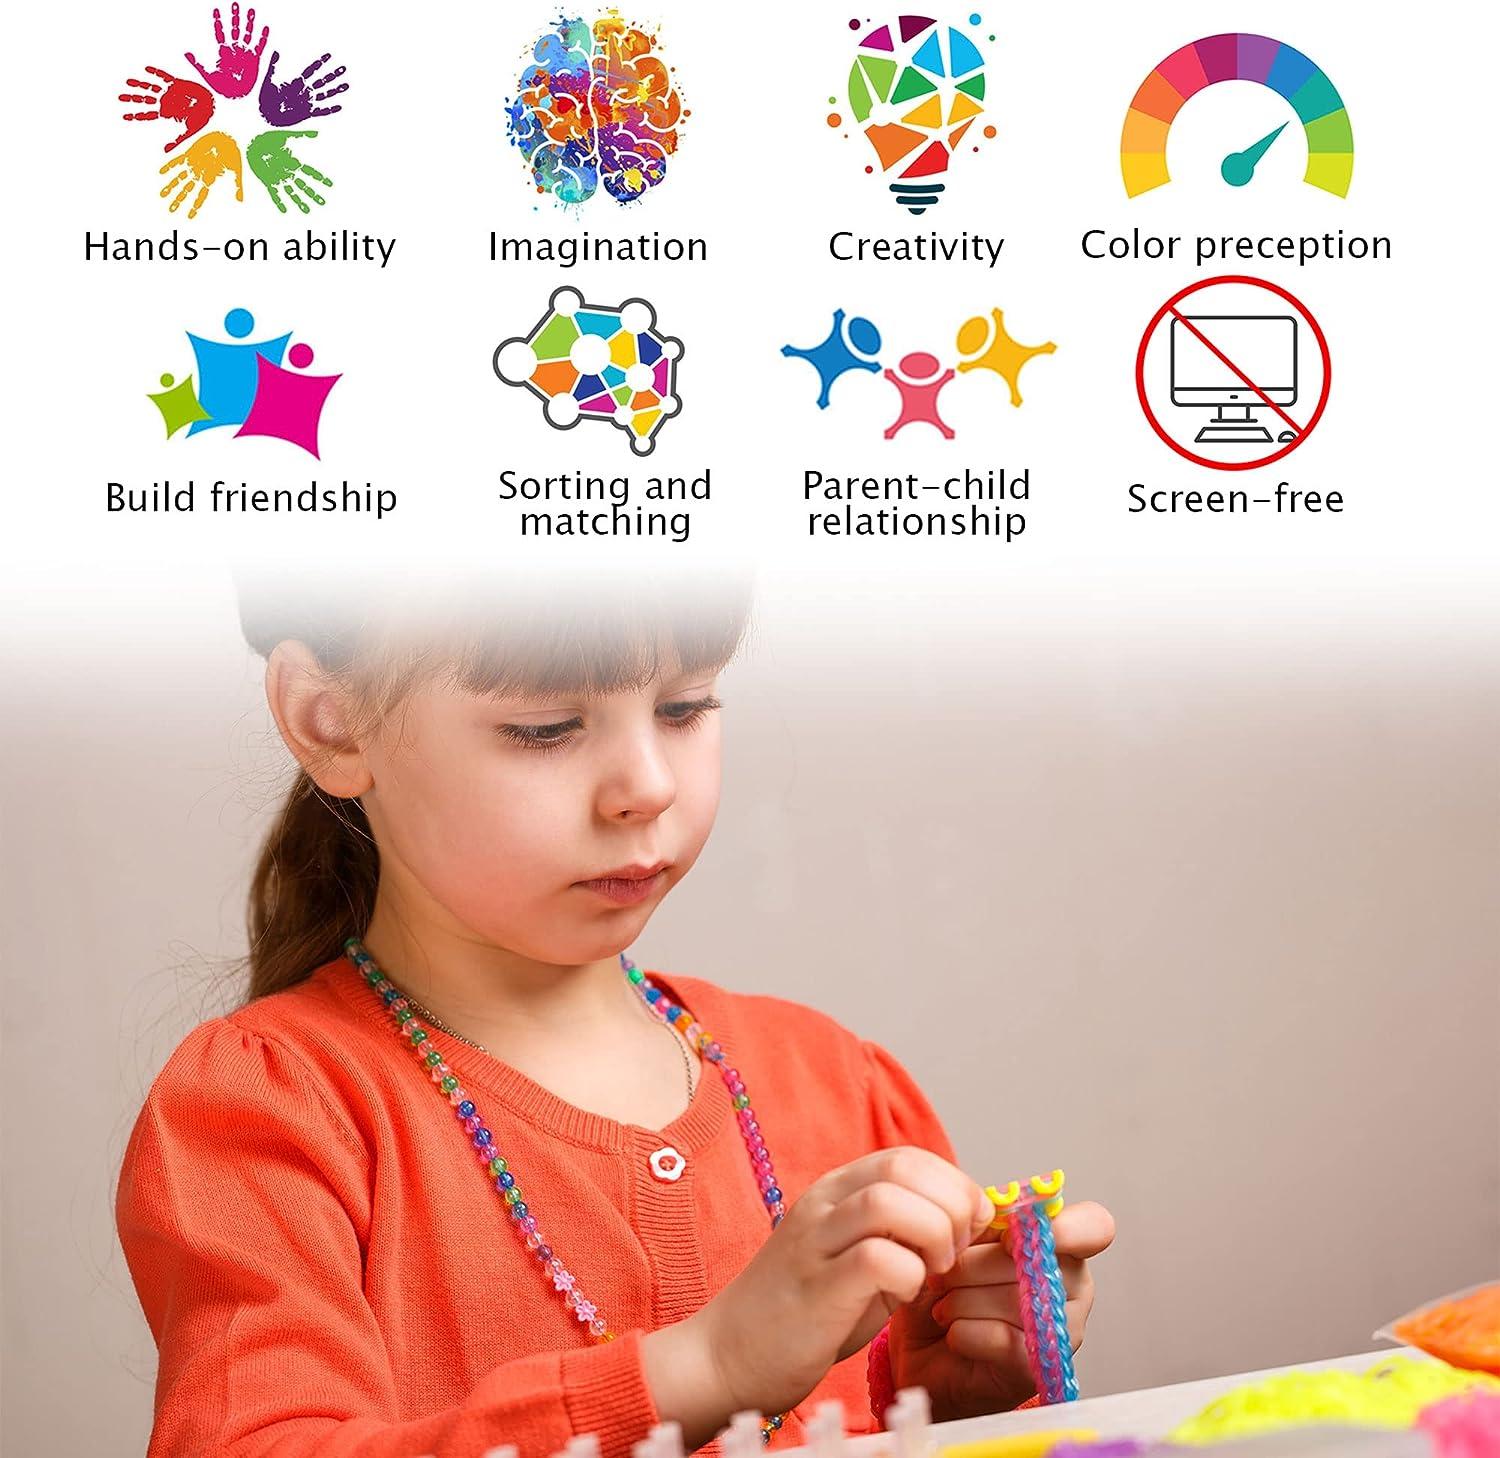 Rubber Bands Loom DIY Weaving Tool Box Creative Set Elastic Silicone  Bracelet Kit Kids Toys for Children Girls Gift 5 10